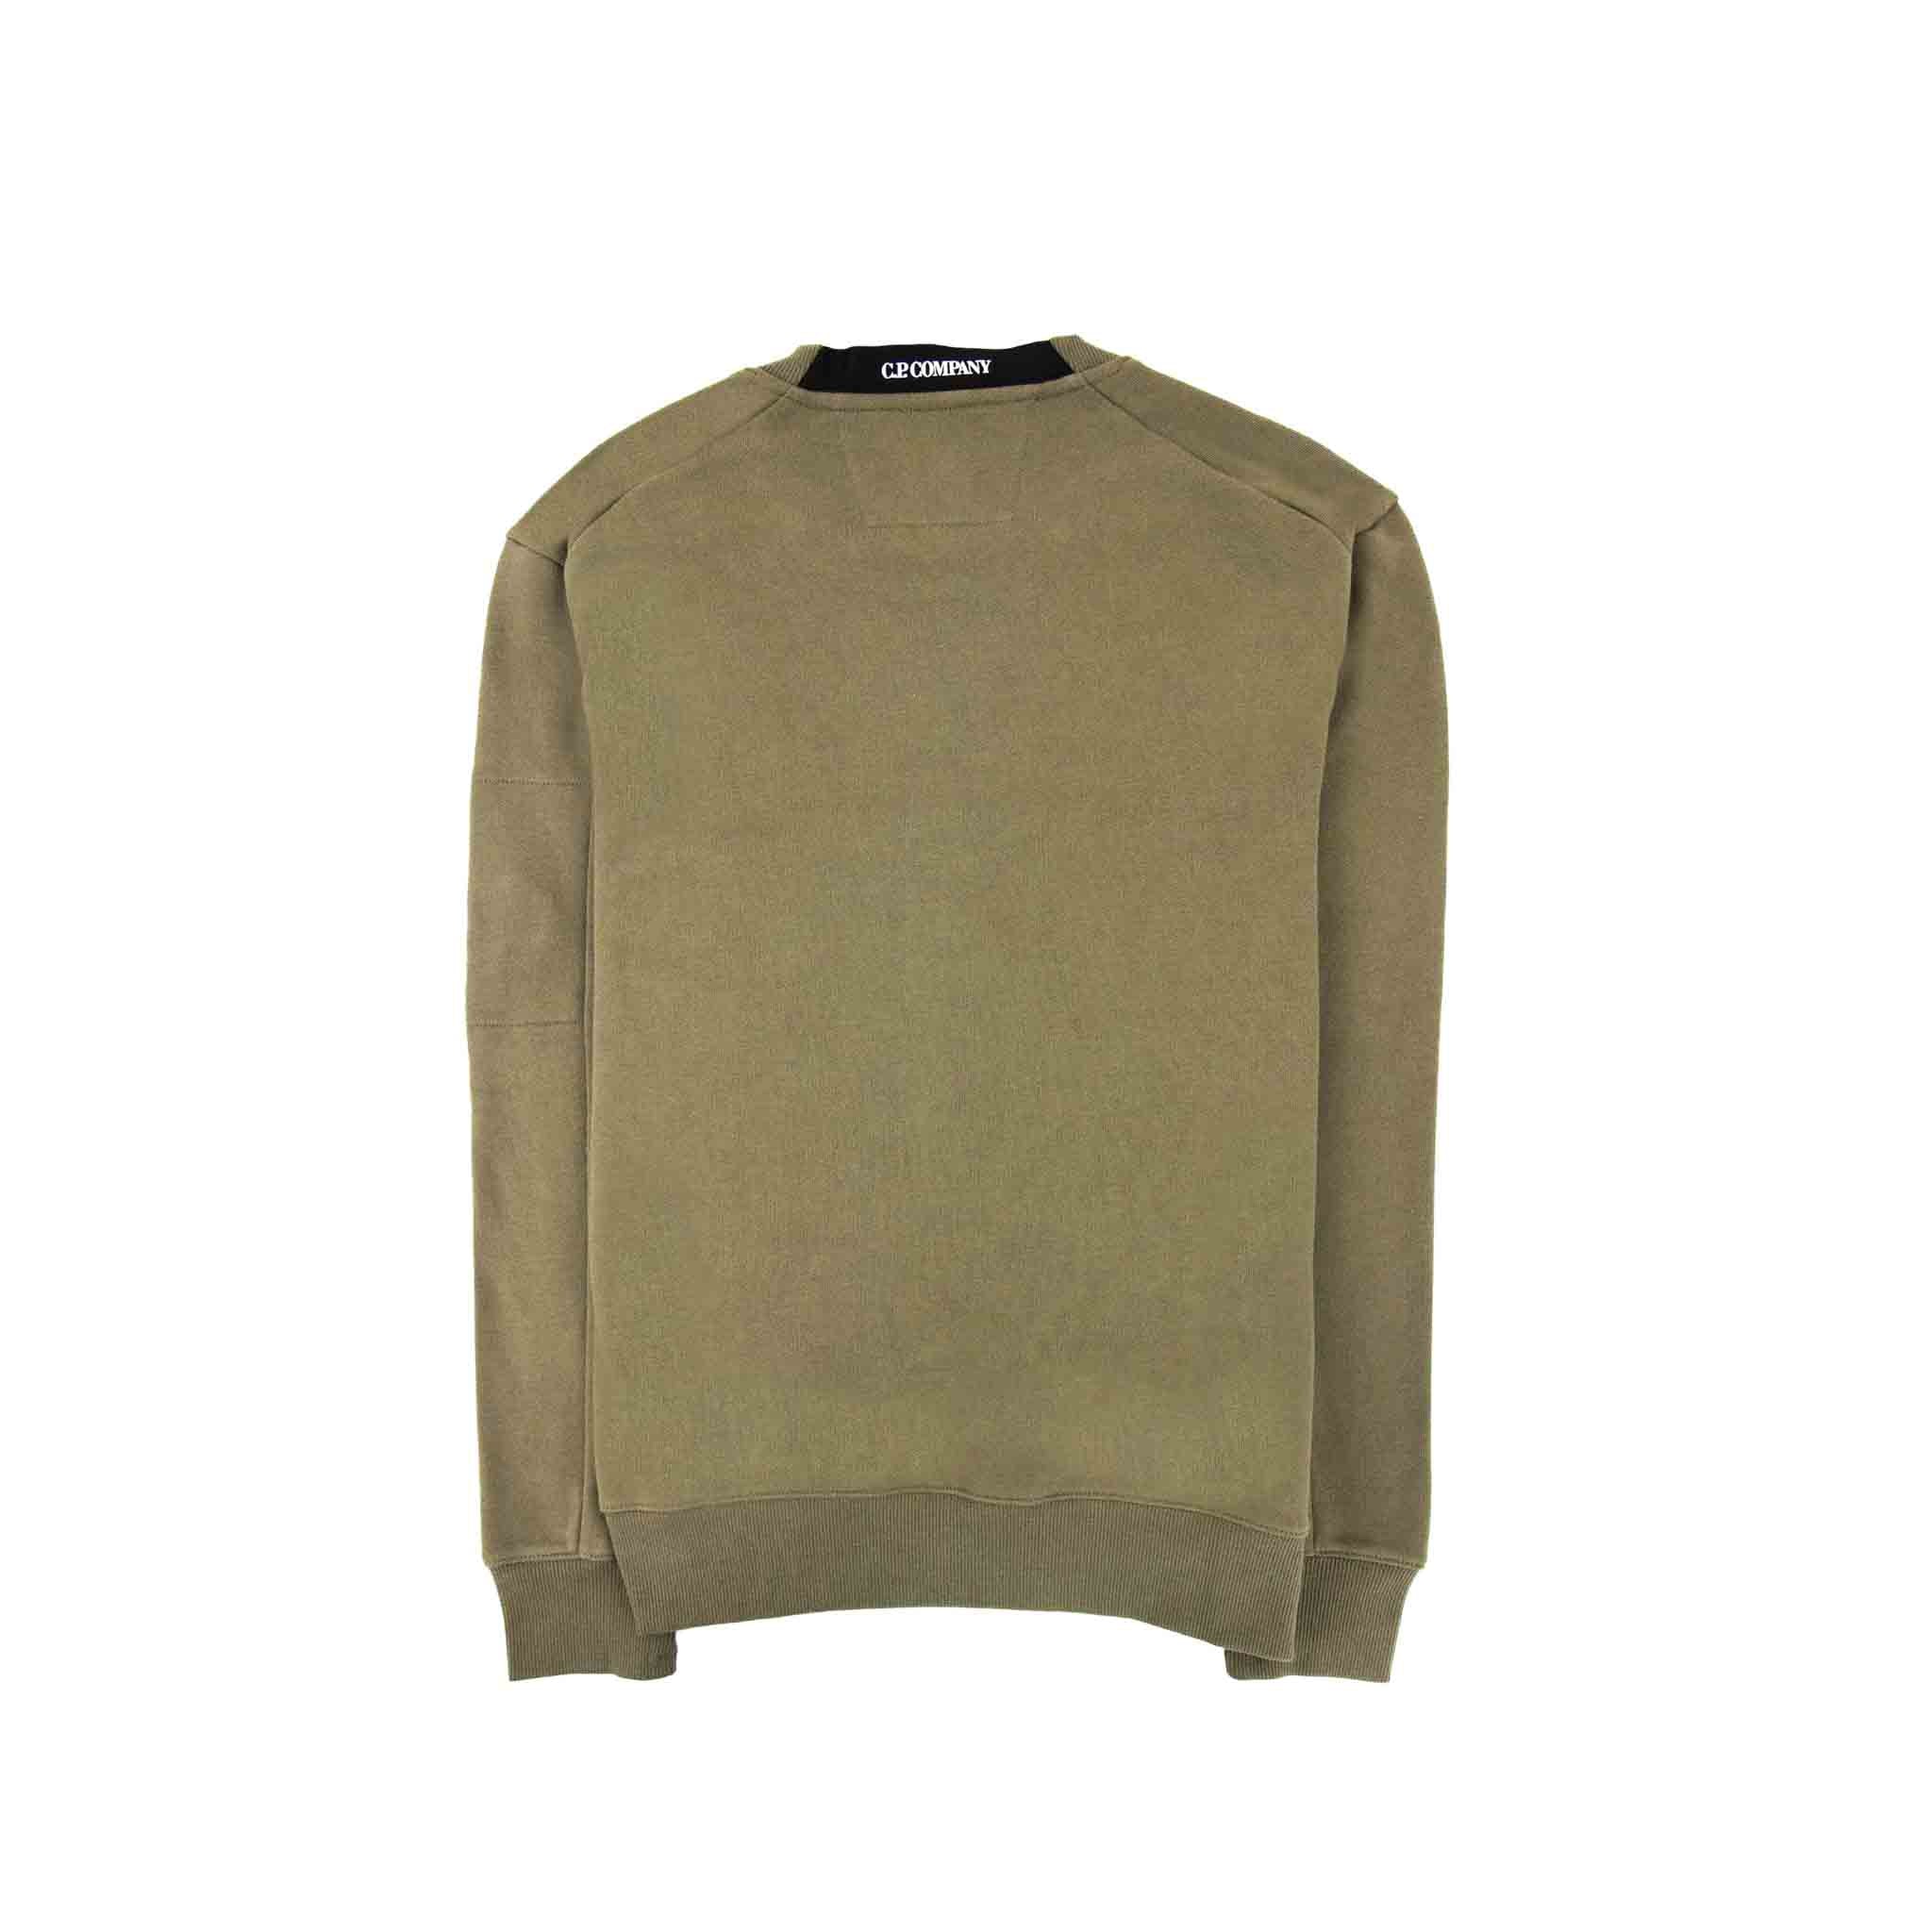 C.P. Company Diagonal Raised Fleece Sweatshirt in Lead Grey